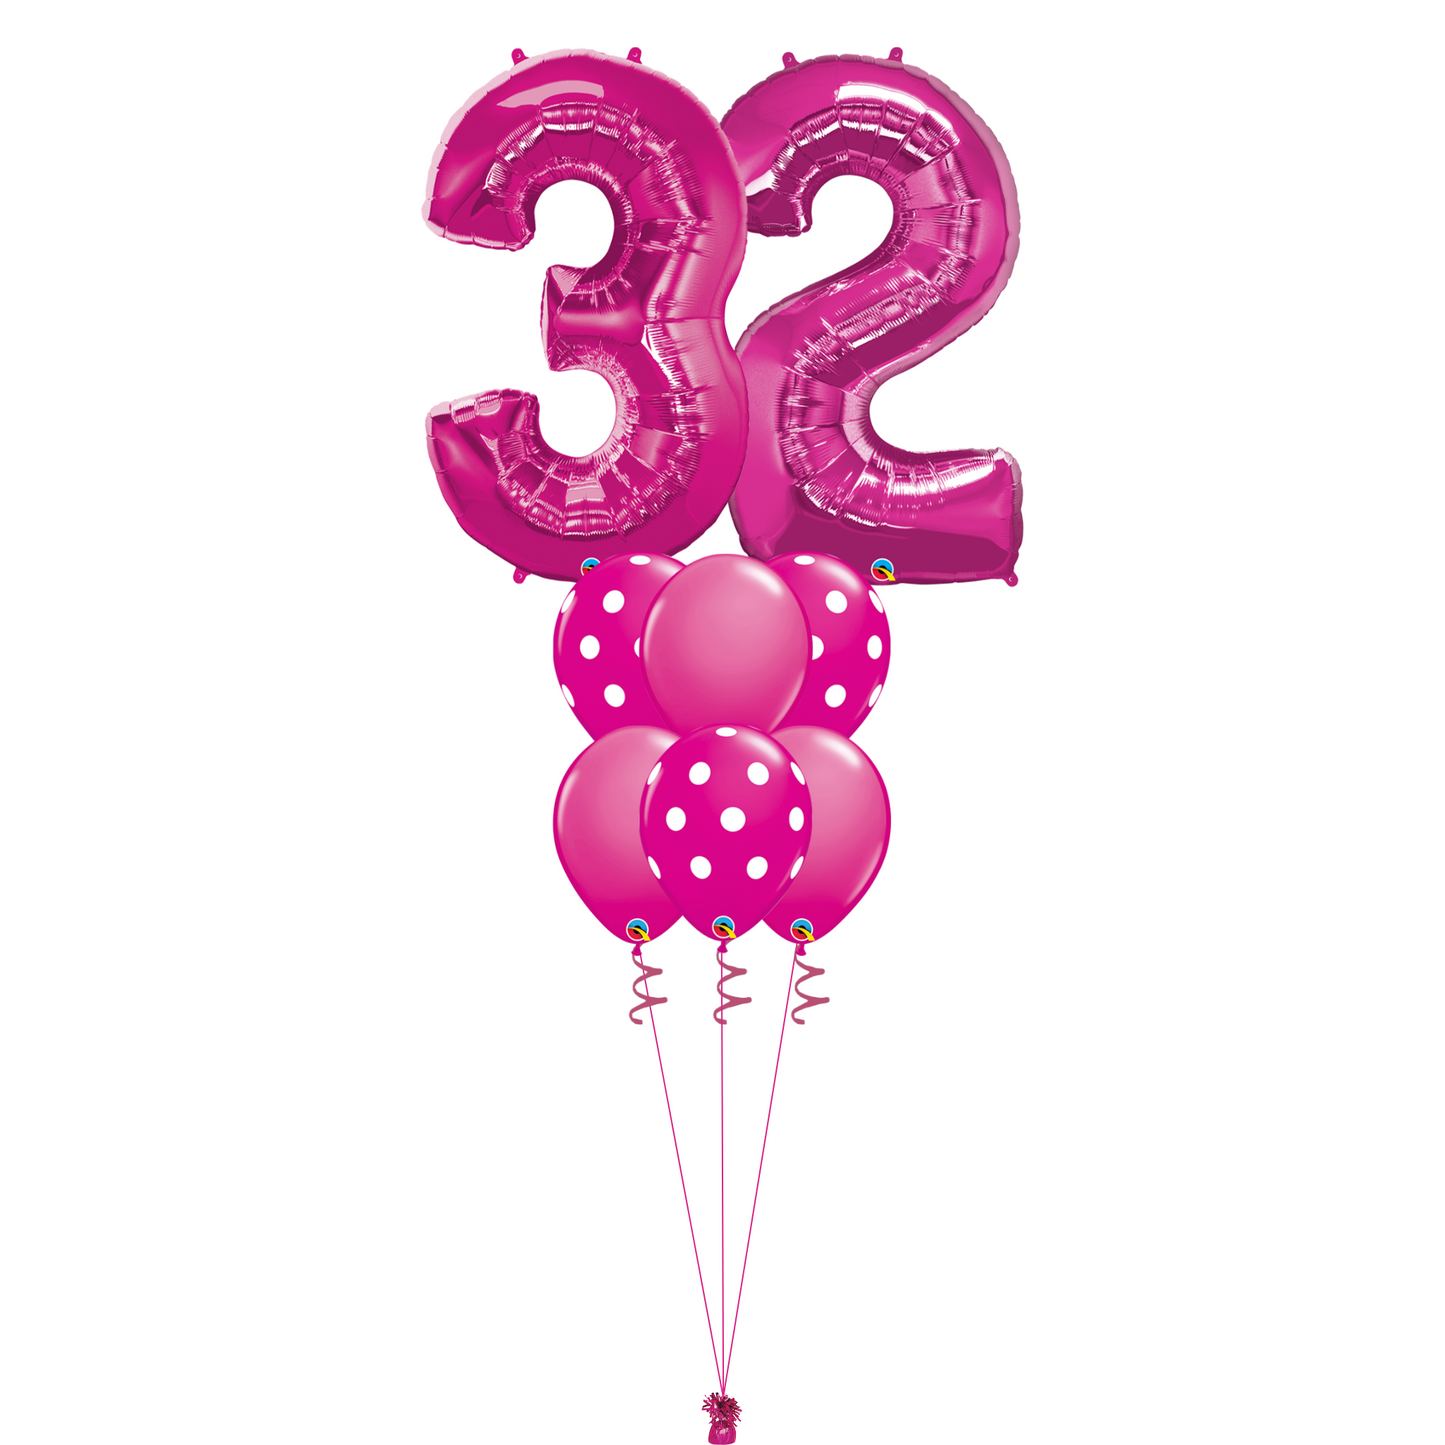 Bouquet of 8 Balloons - Pink Polka Dot